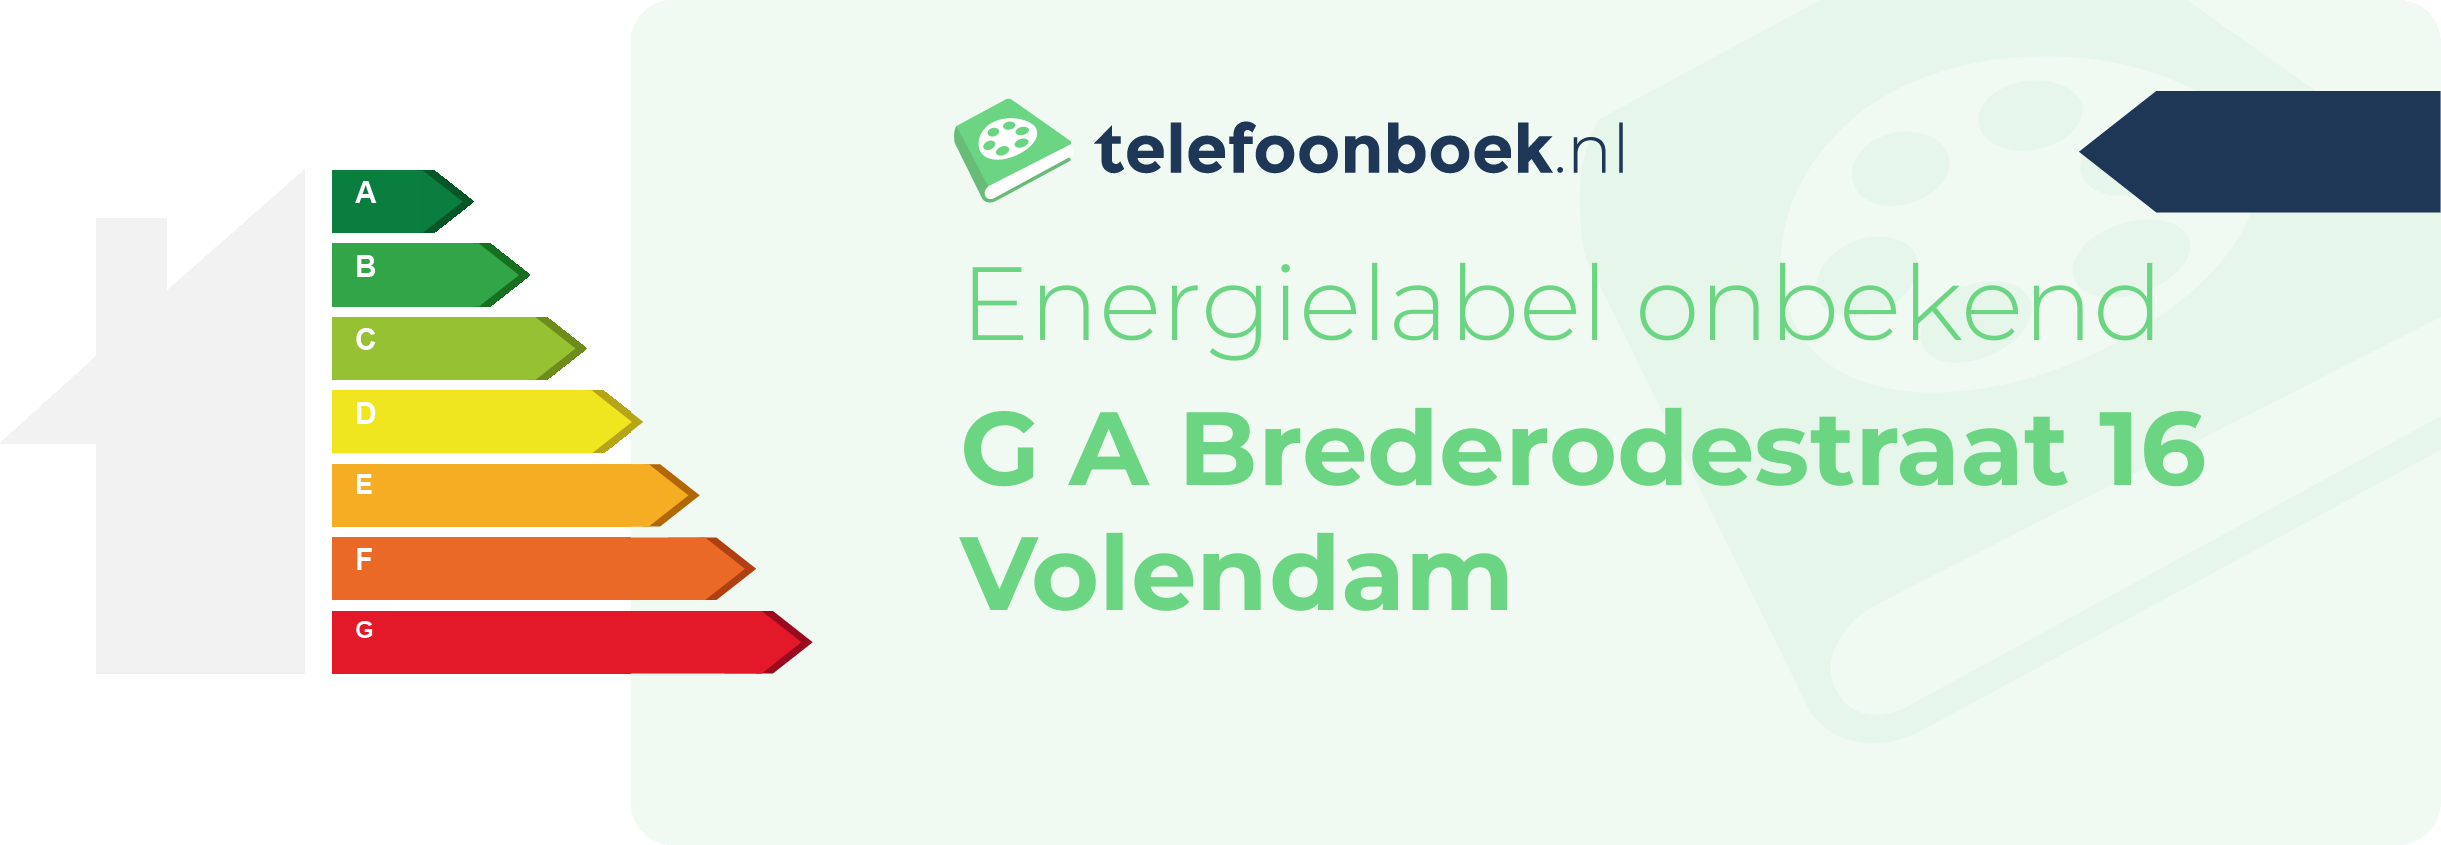 Energielabel G A Brederodestraat 16 Volendam